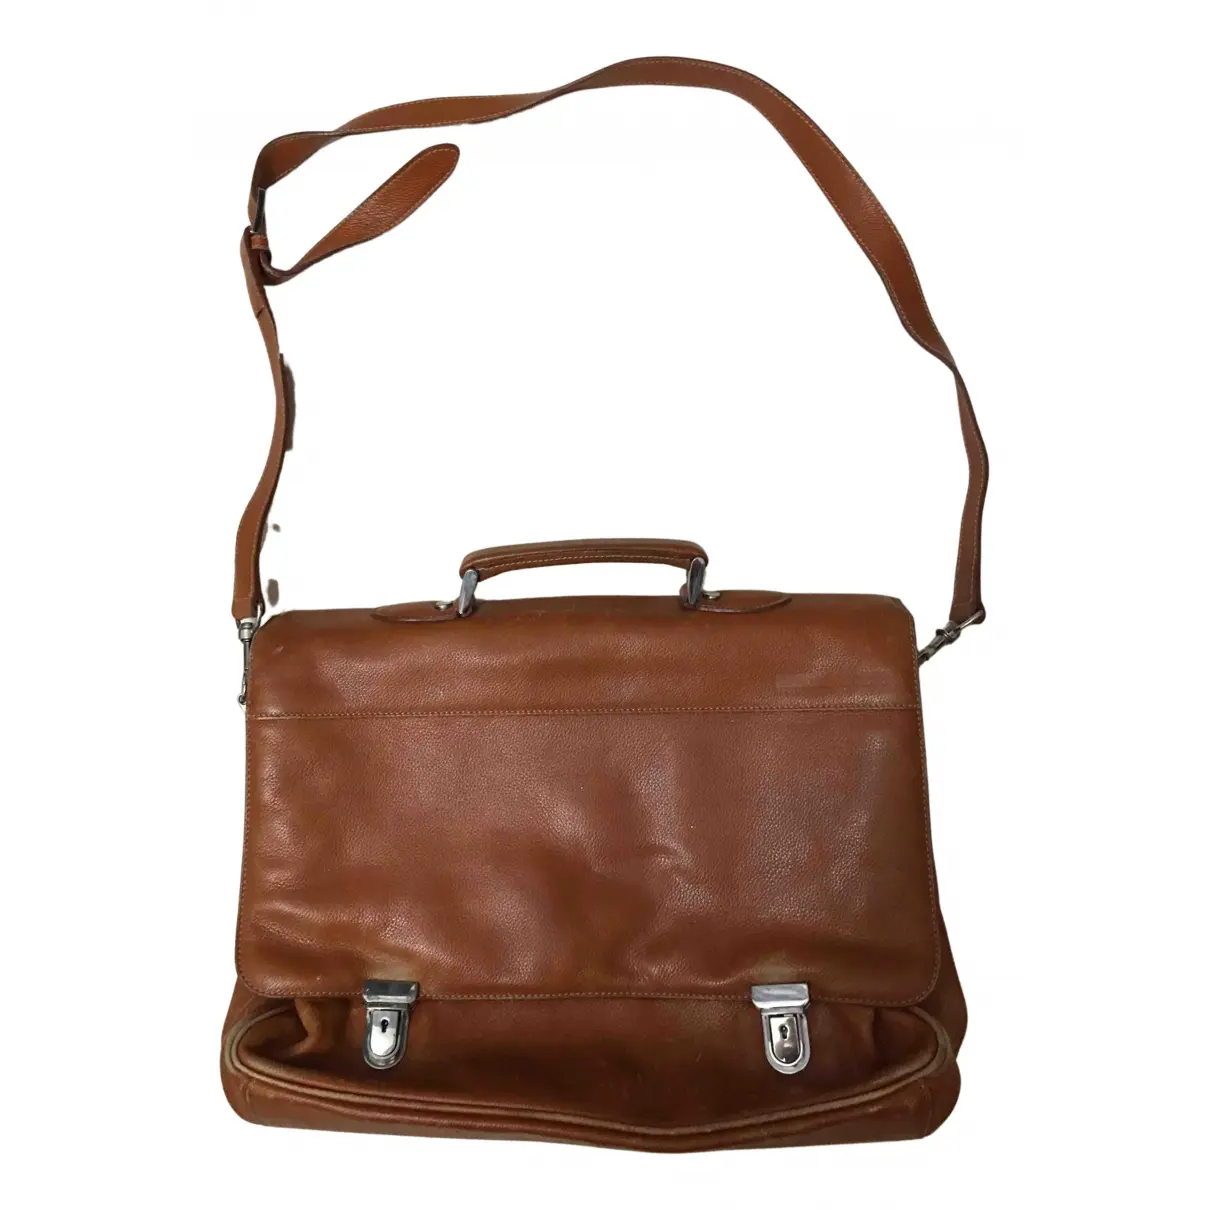 Leather handbag SAMSONITE